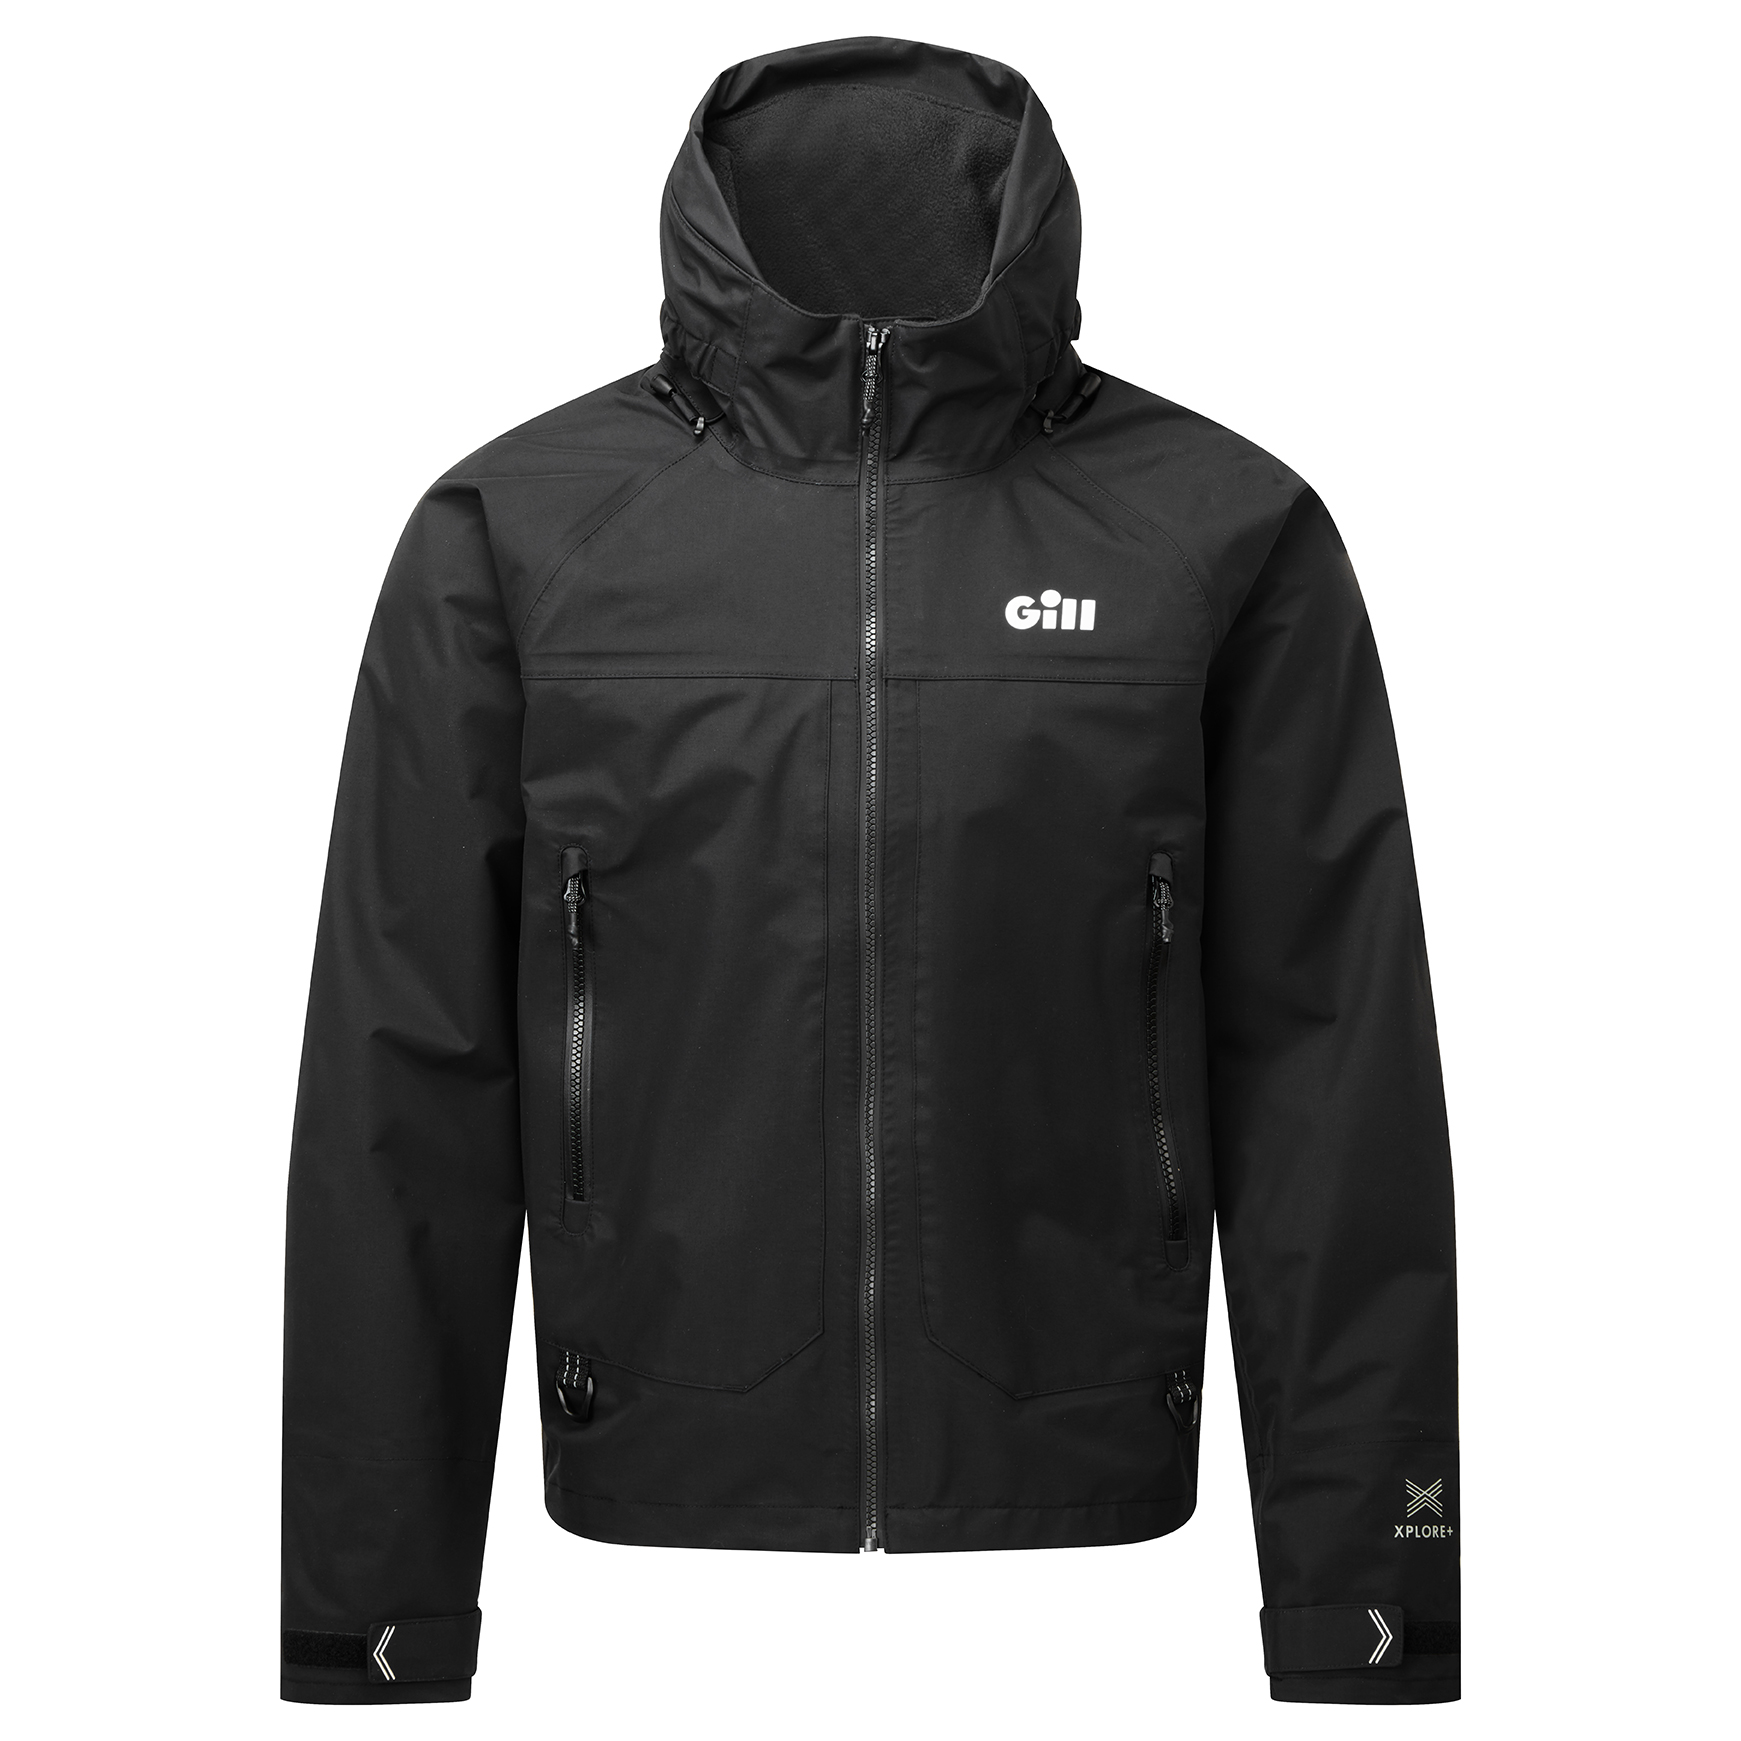 【NEW】GILLギル V101 VERSO Jacket ジャケット ブラック